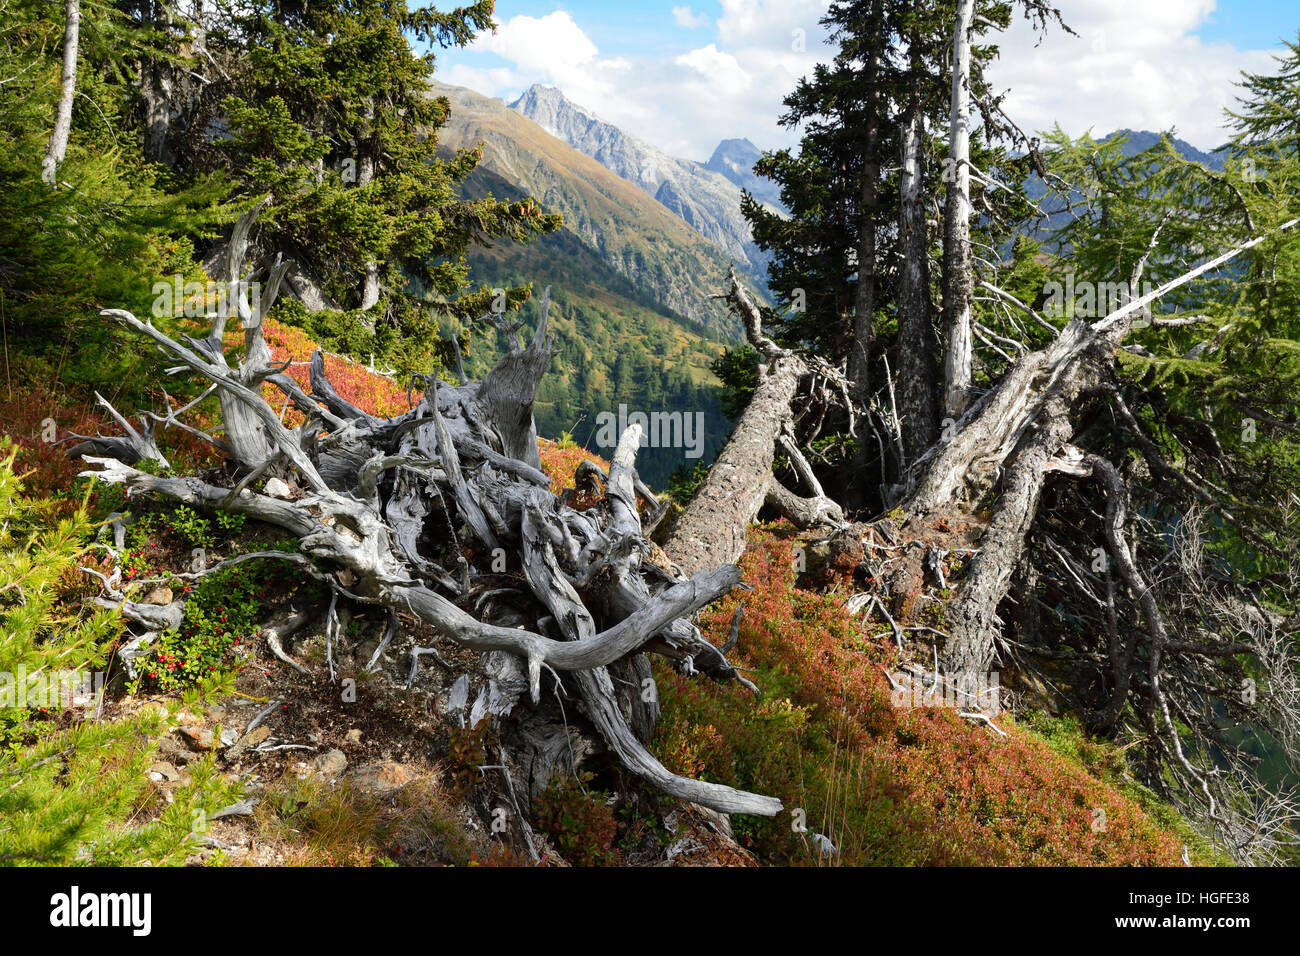 Mountain forest, dead wood, Valais, Switzerland Stock Photo